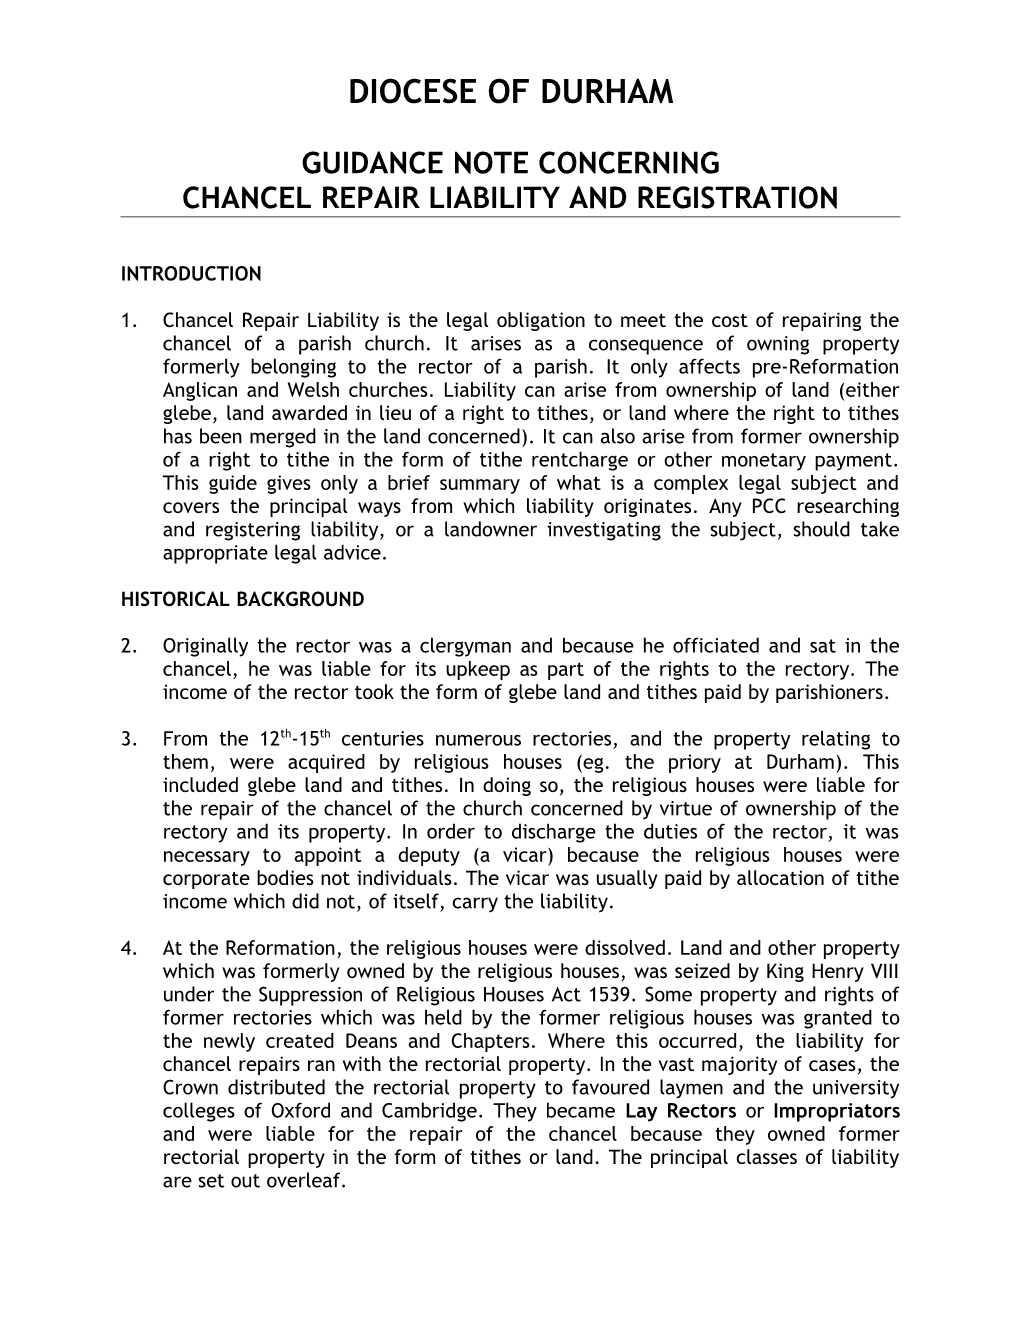 Chancel Repair Liability and Registration